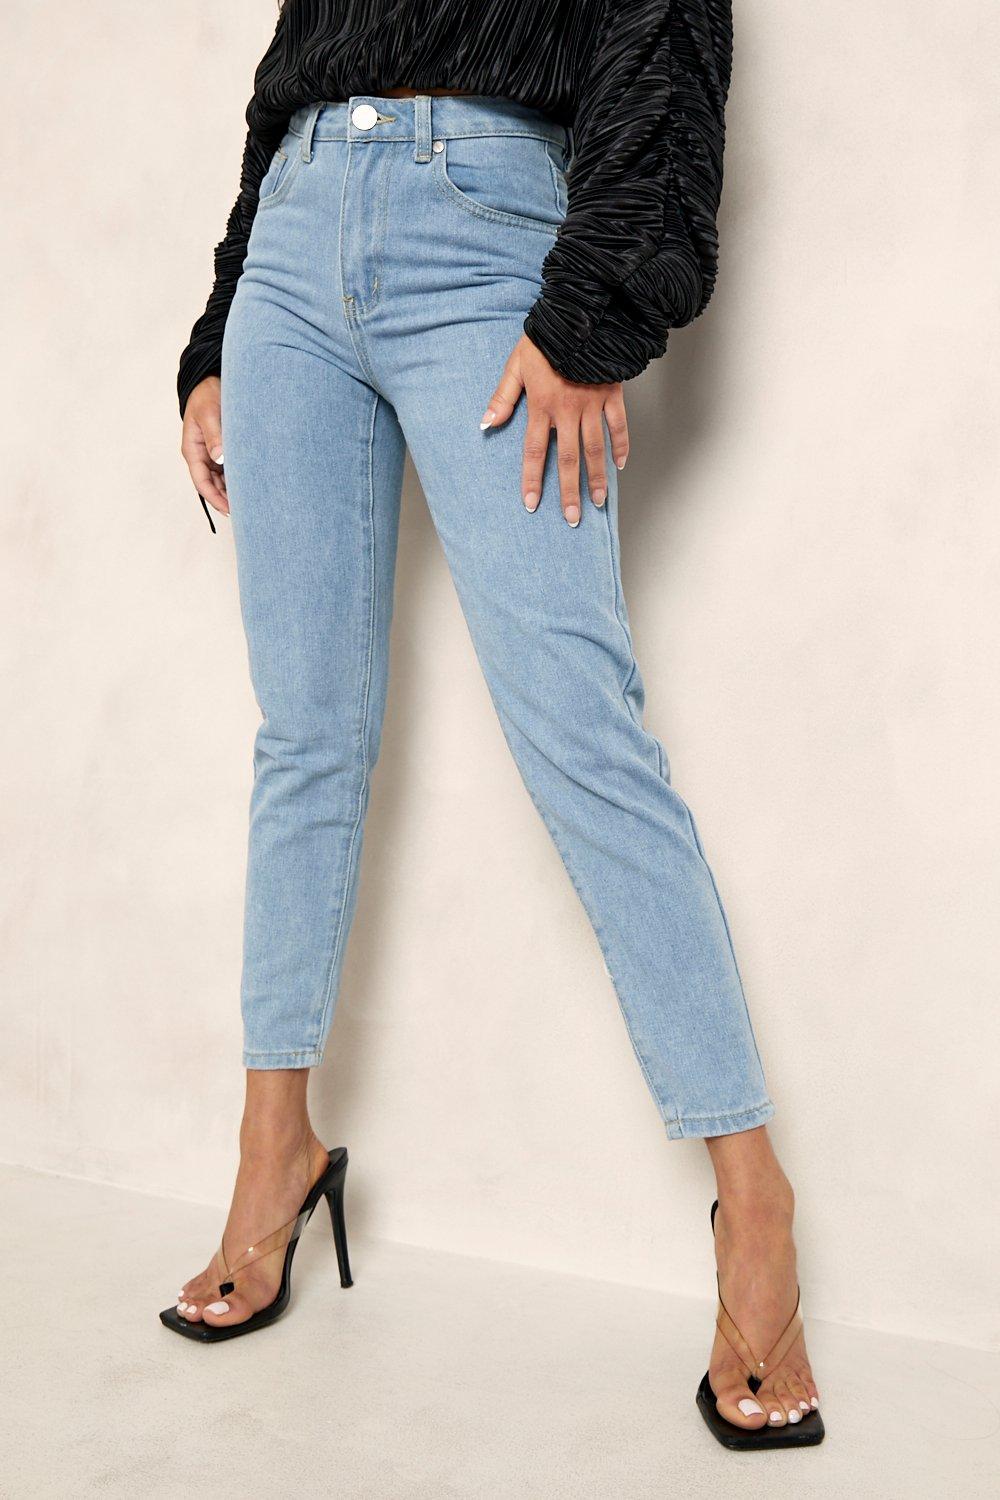 petite straight leg jeans